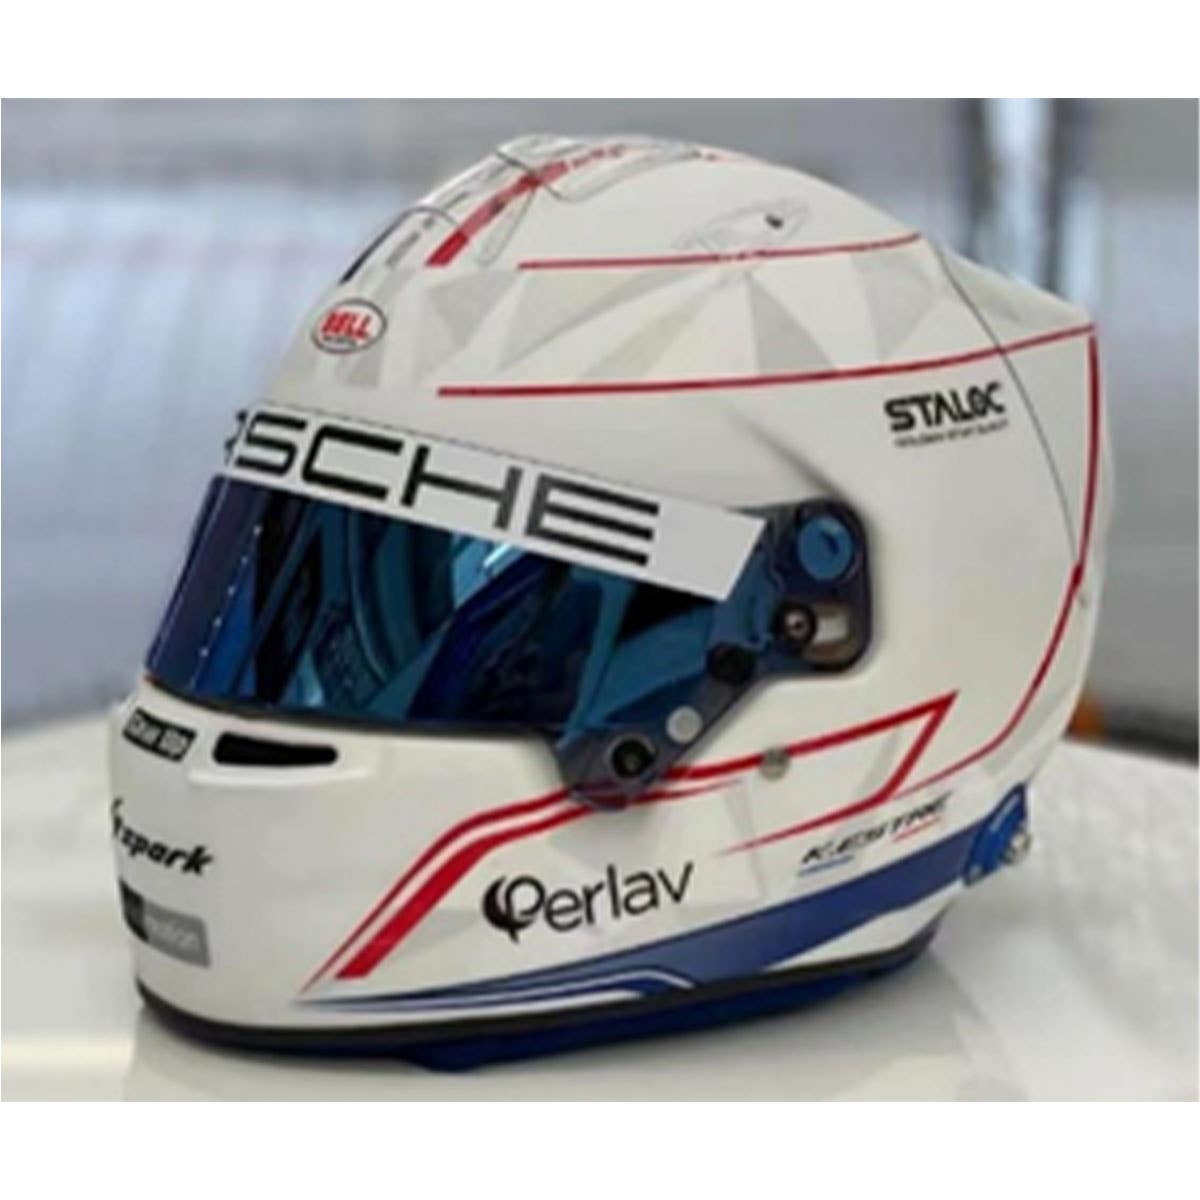 Kévin Estre - 24H Le Mans 2022 - 1:5 Scale Resin Model Helmet